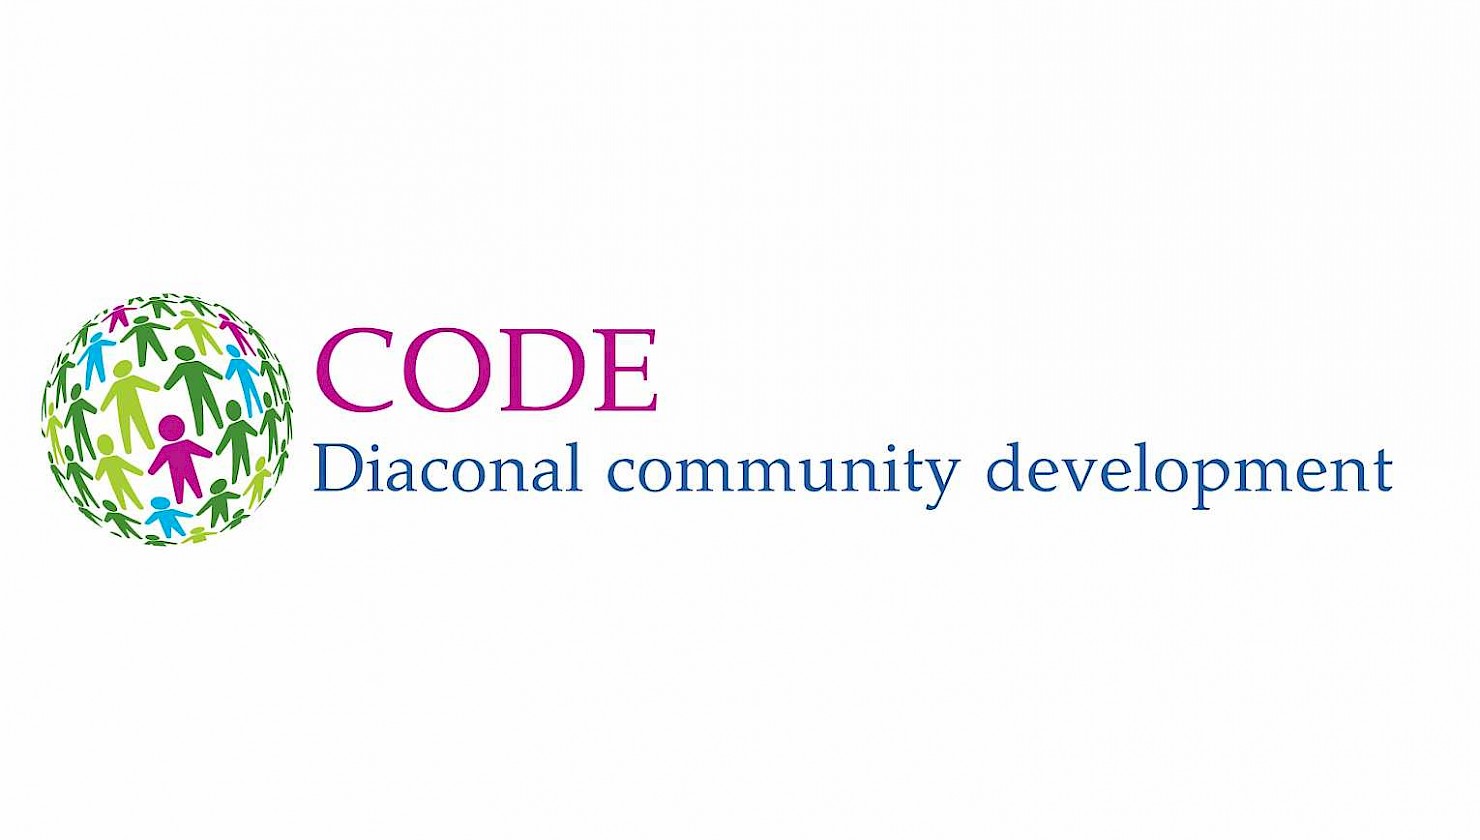 Diaconal community development (CODE)